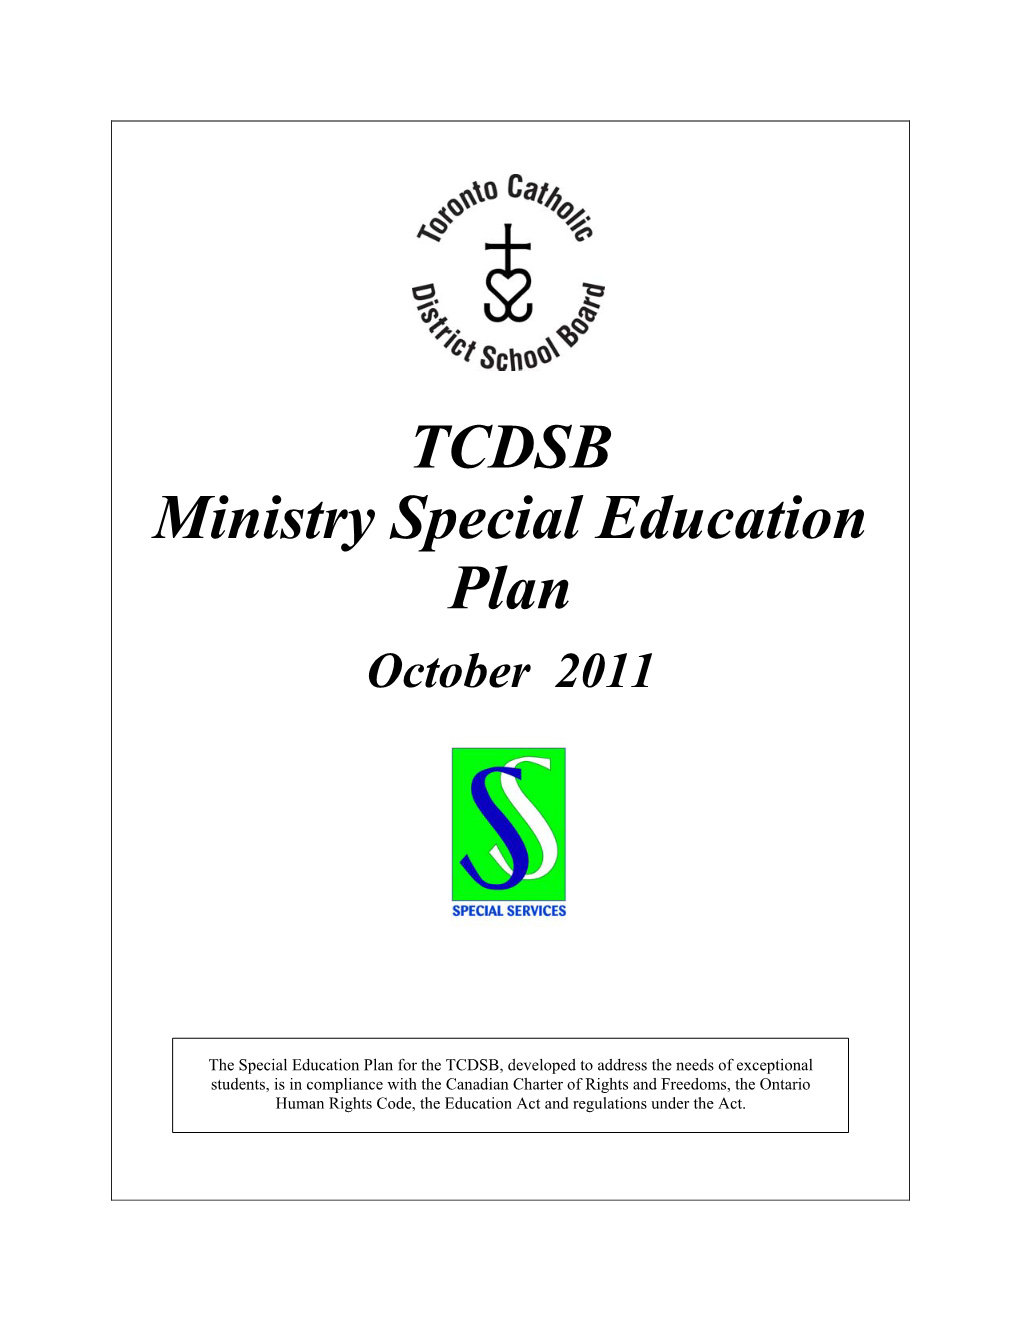 TCDSB Ministry Special Education Plan October 2011